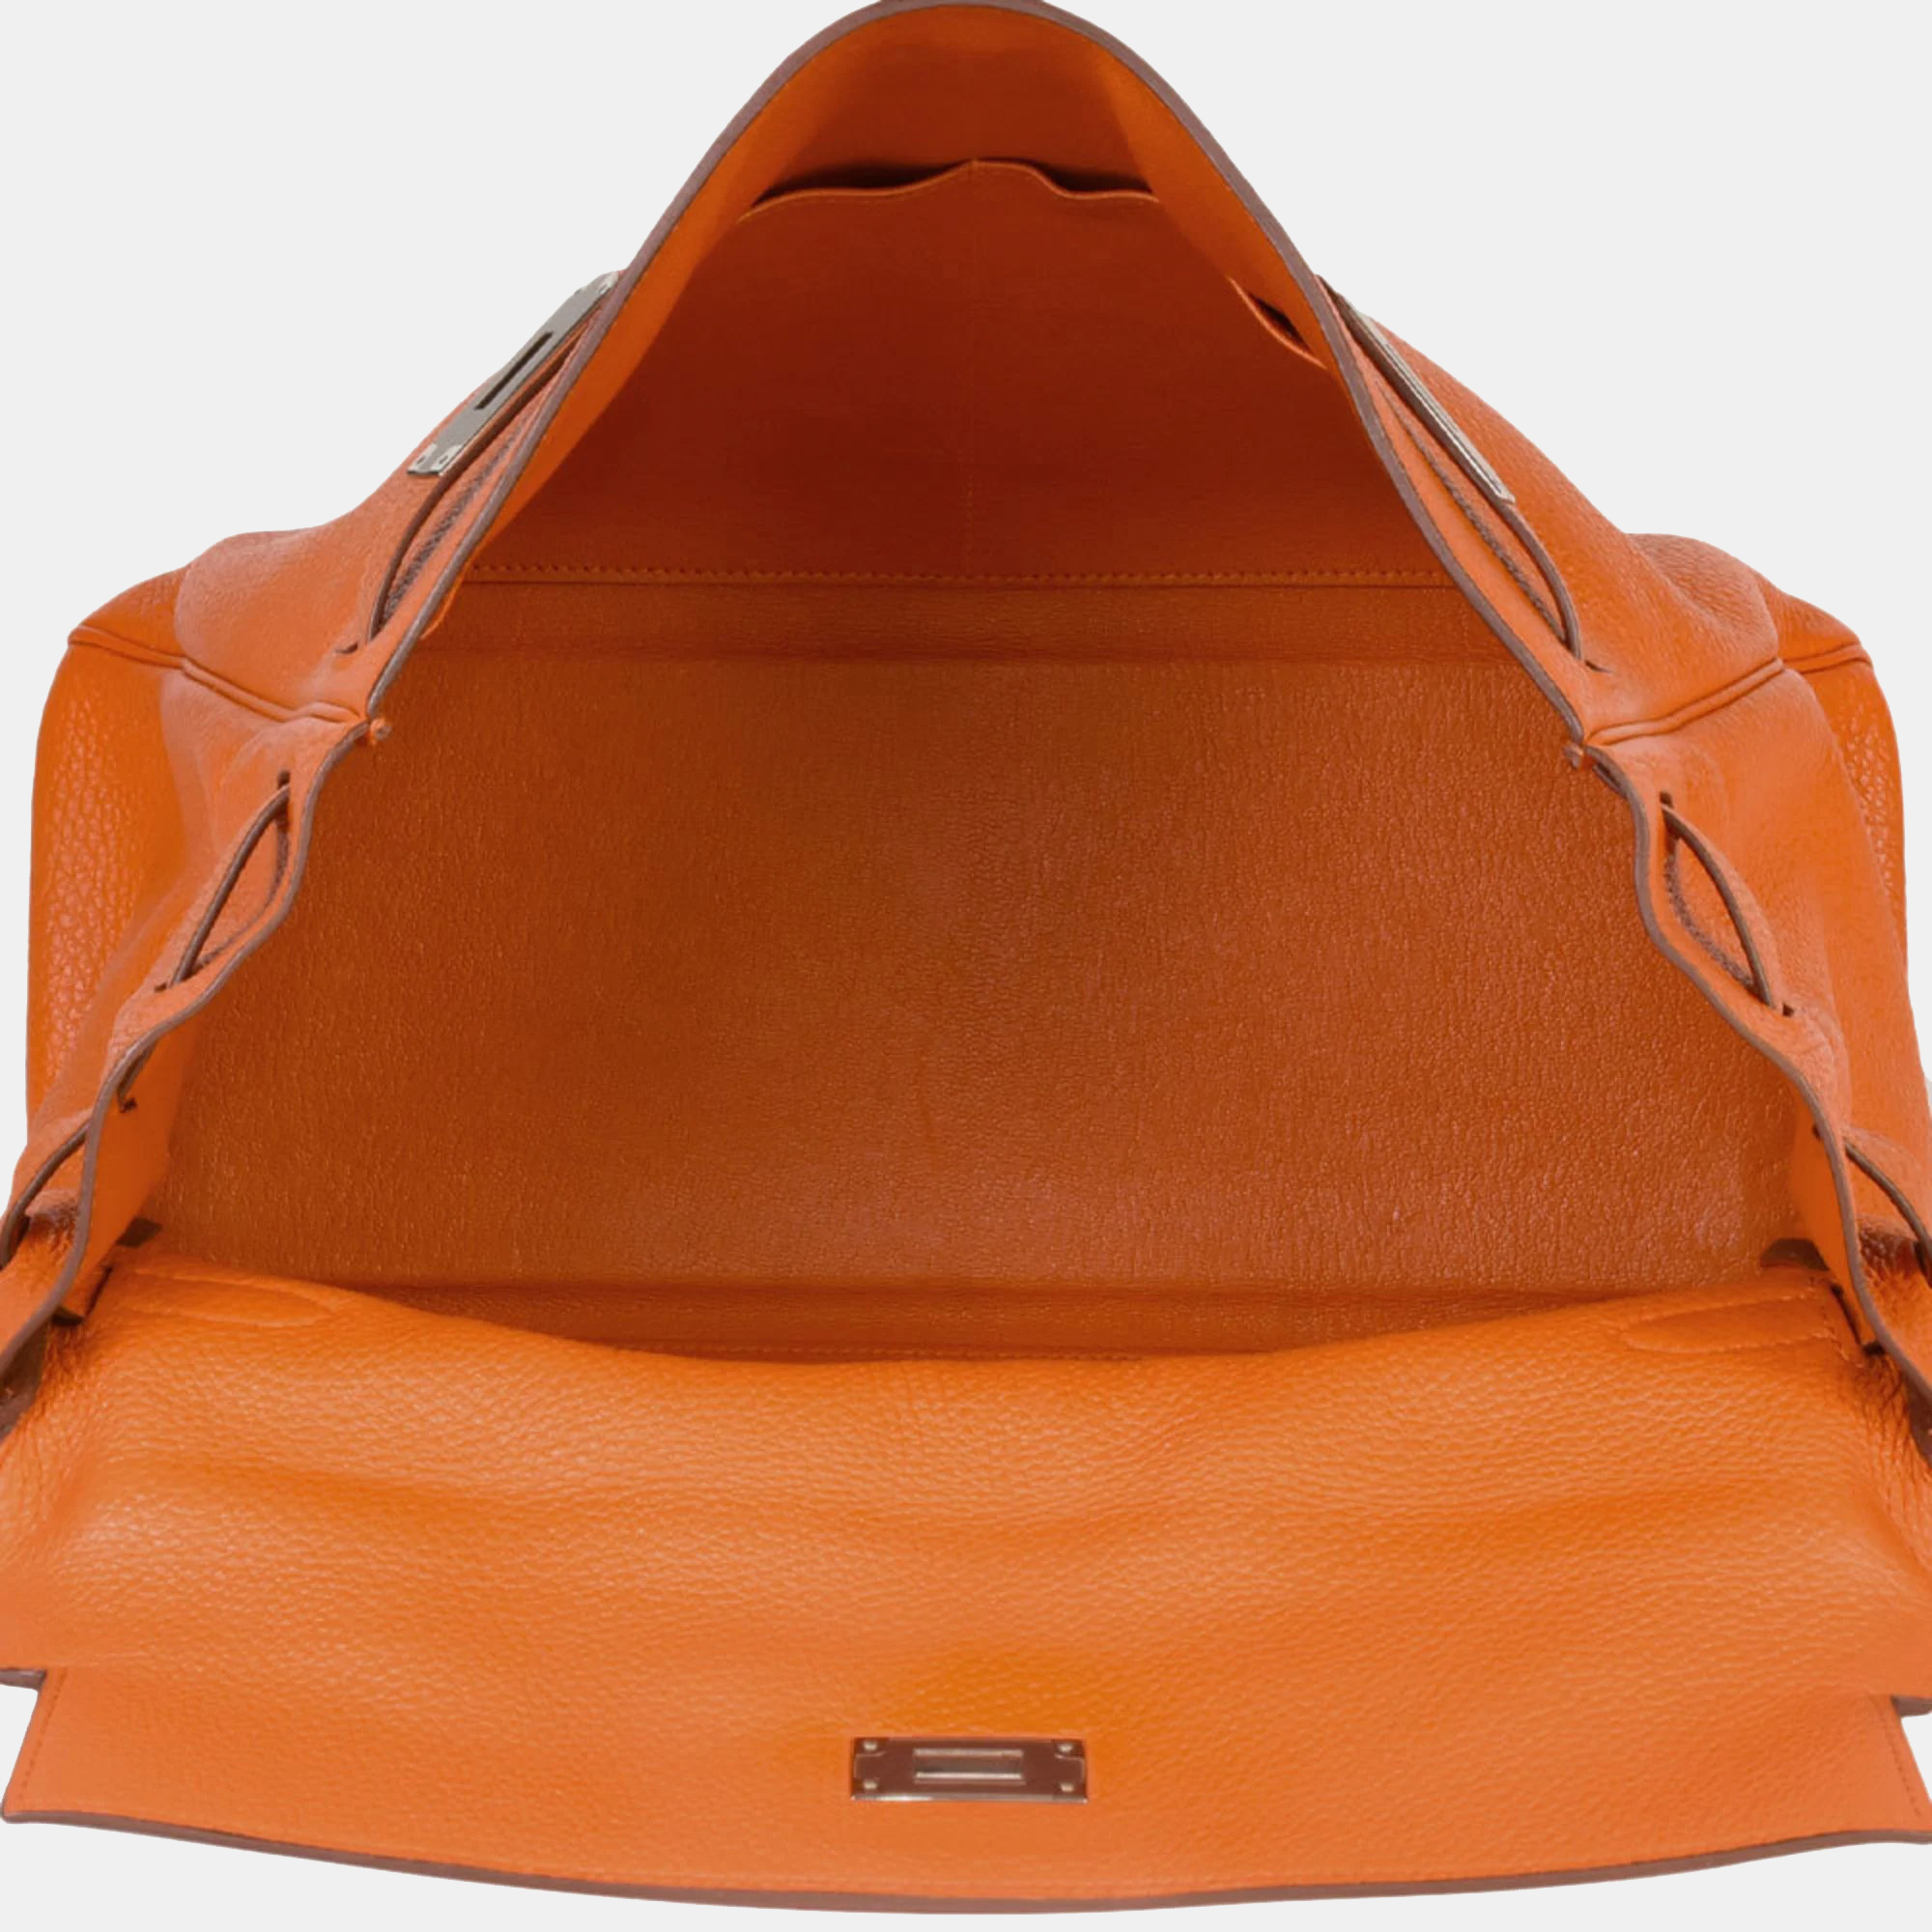 HERMES Kelly 35 Inner Stitch Orange Togo â–¡Q Stamp (Manufactured In 2013) Handbag